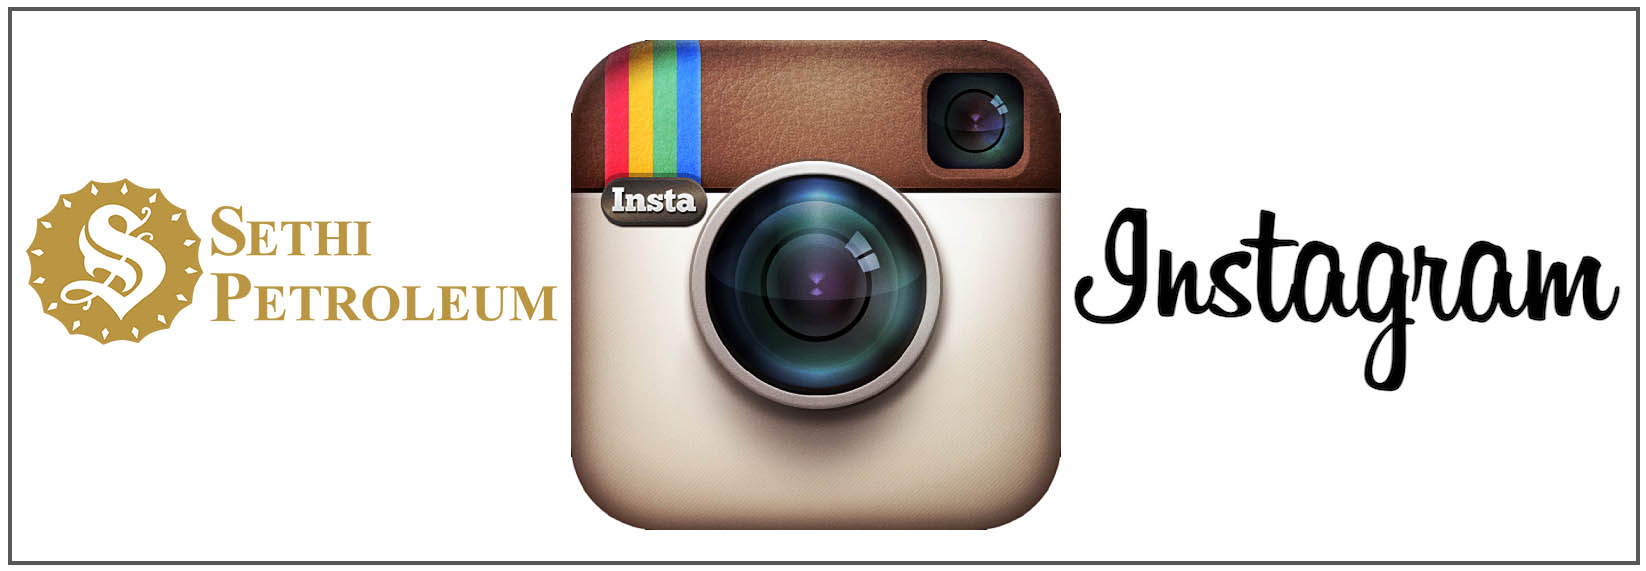 Sethi Petroleum Launches Instagram Page